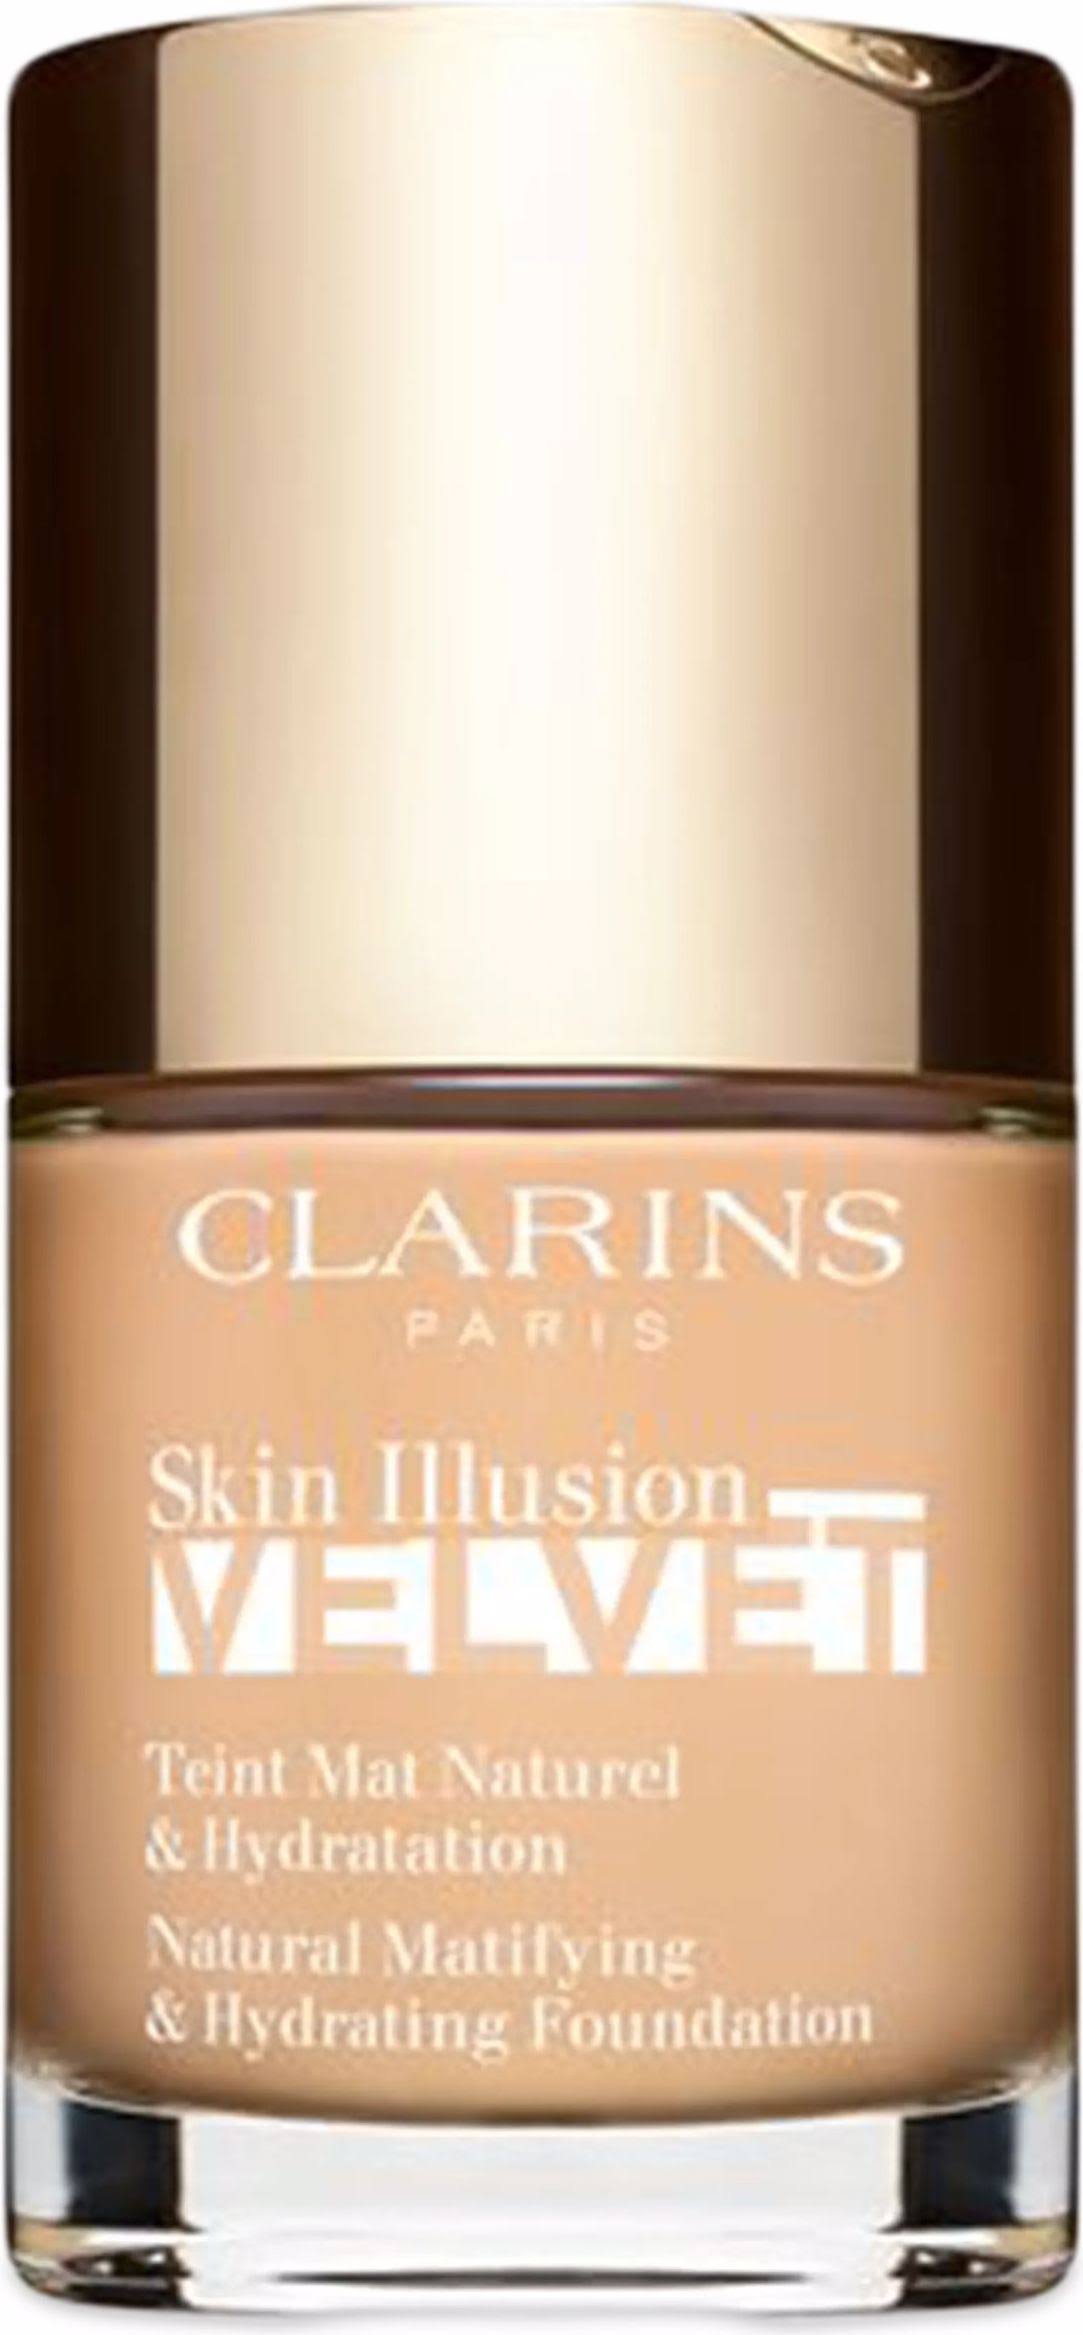 Clarins Skin Illusion Velvet 103N, 30 ml